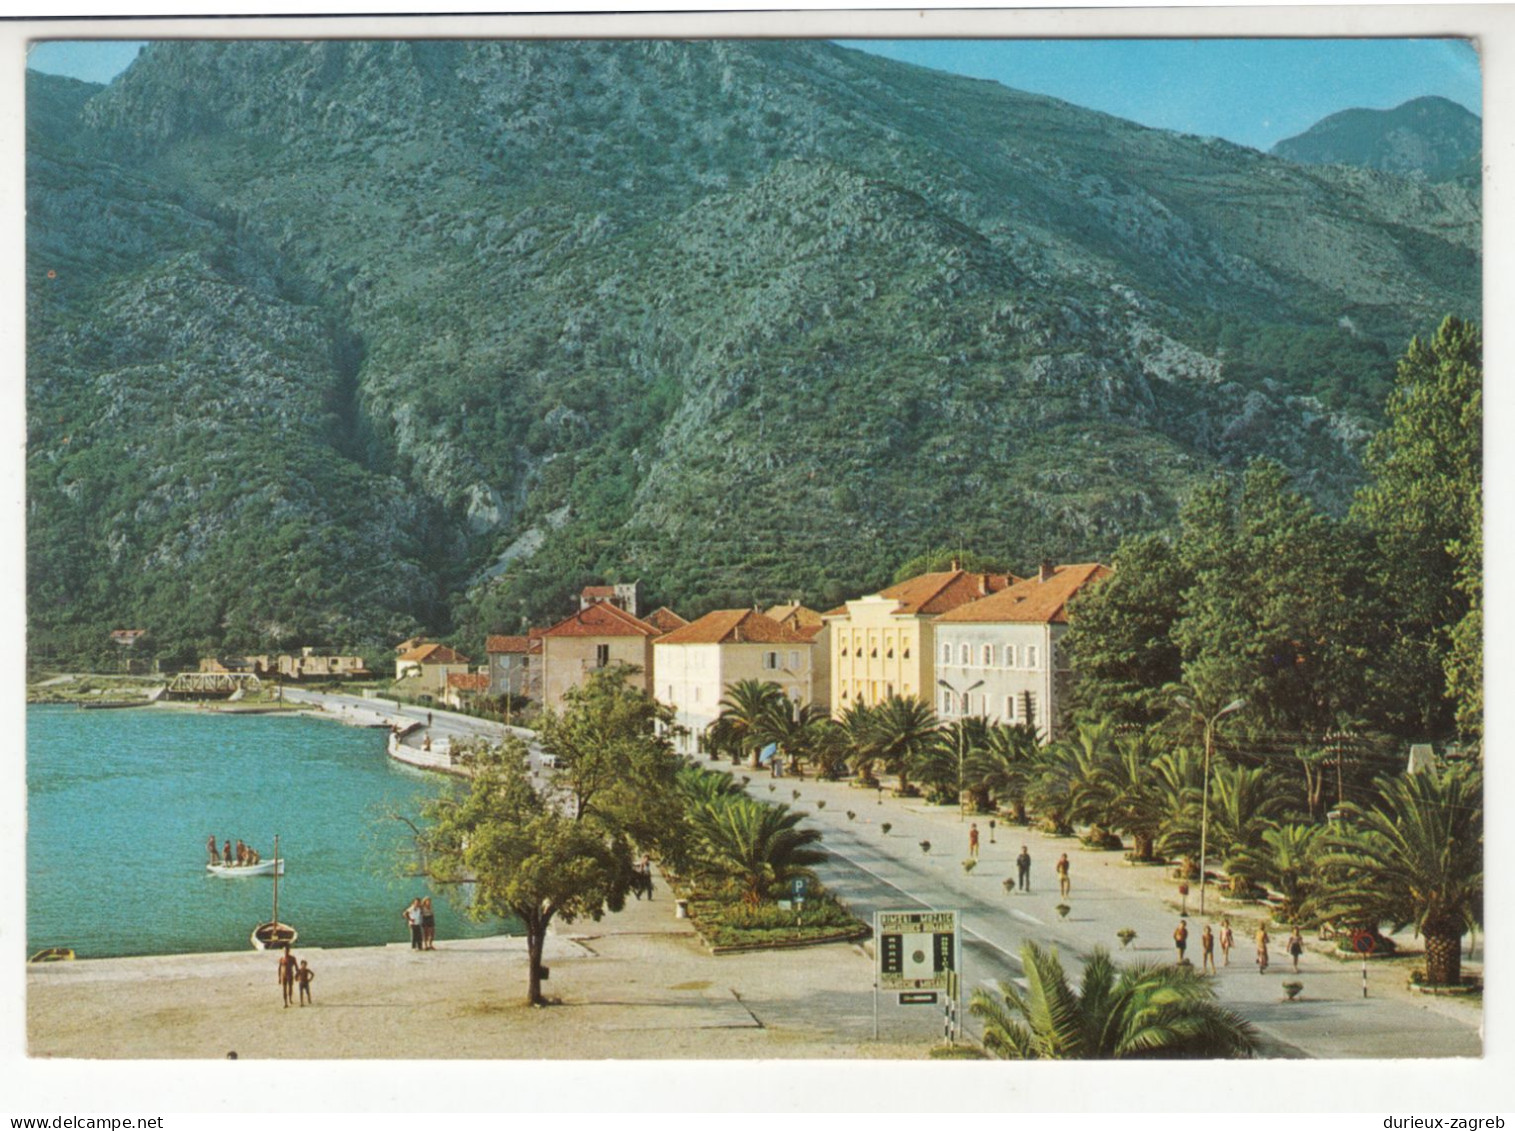 Risan Old Postcard Posted 1973 PT240401 - Montenegro